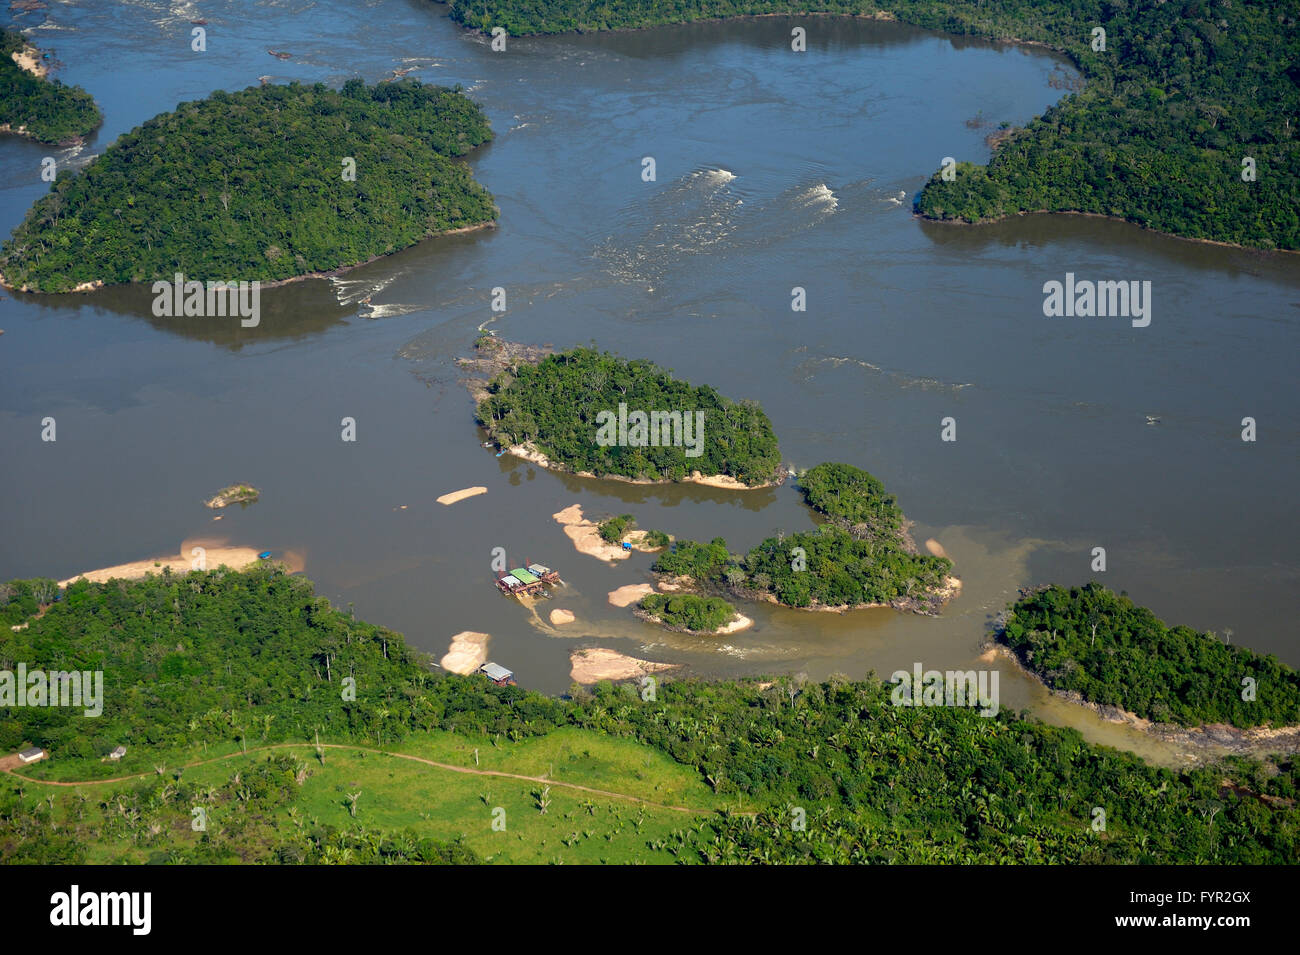 Vista aérea, balsas de prospectores o garimpeiros en el río Tapajos tropical en la selva amazónica, distrito Itaituba Foto de stock